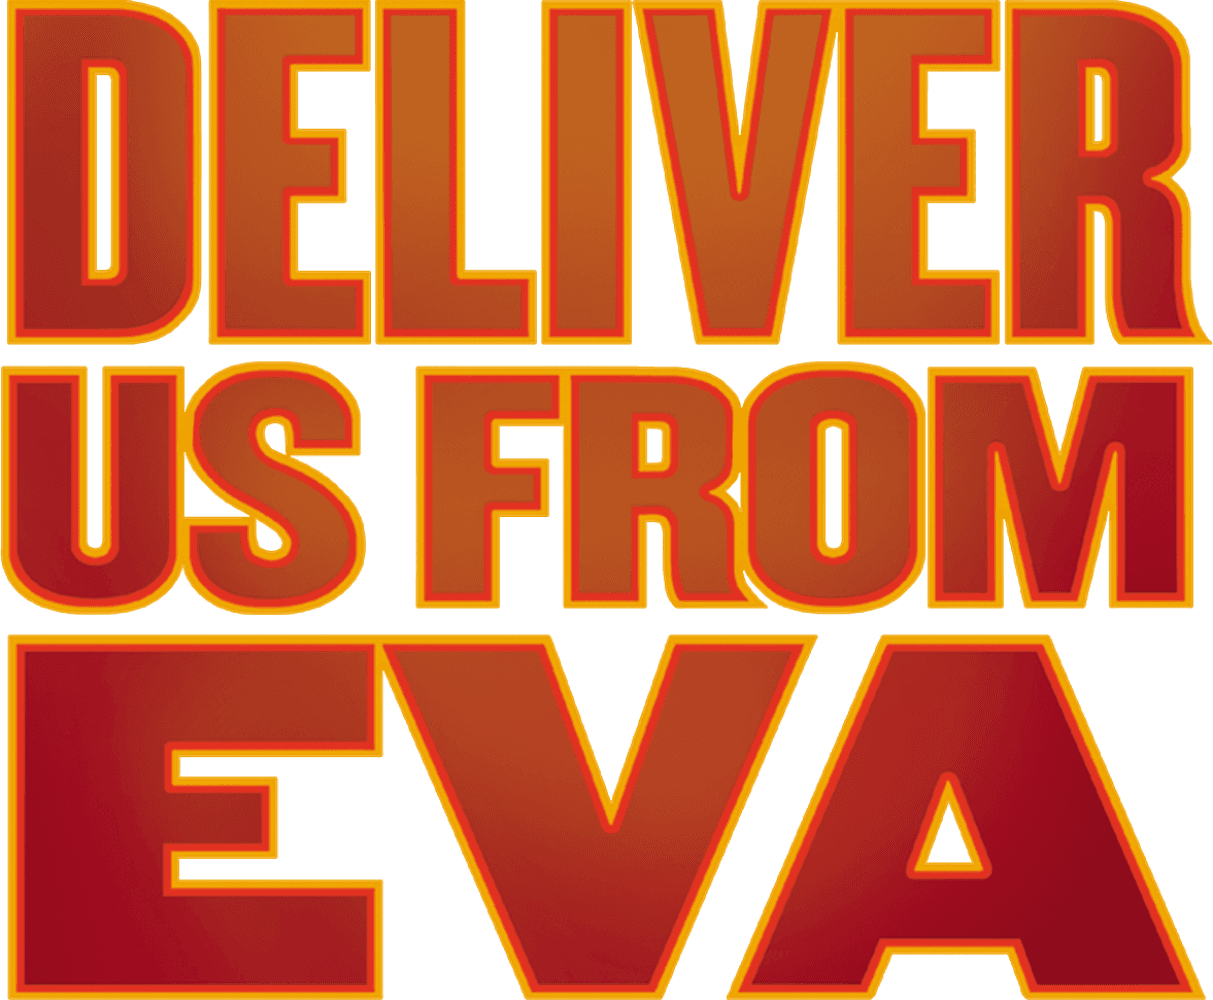 Deliver Us from Eva logo